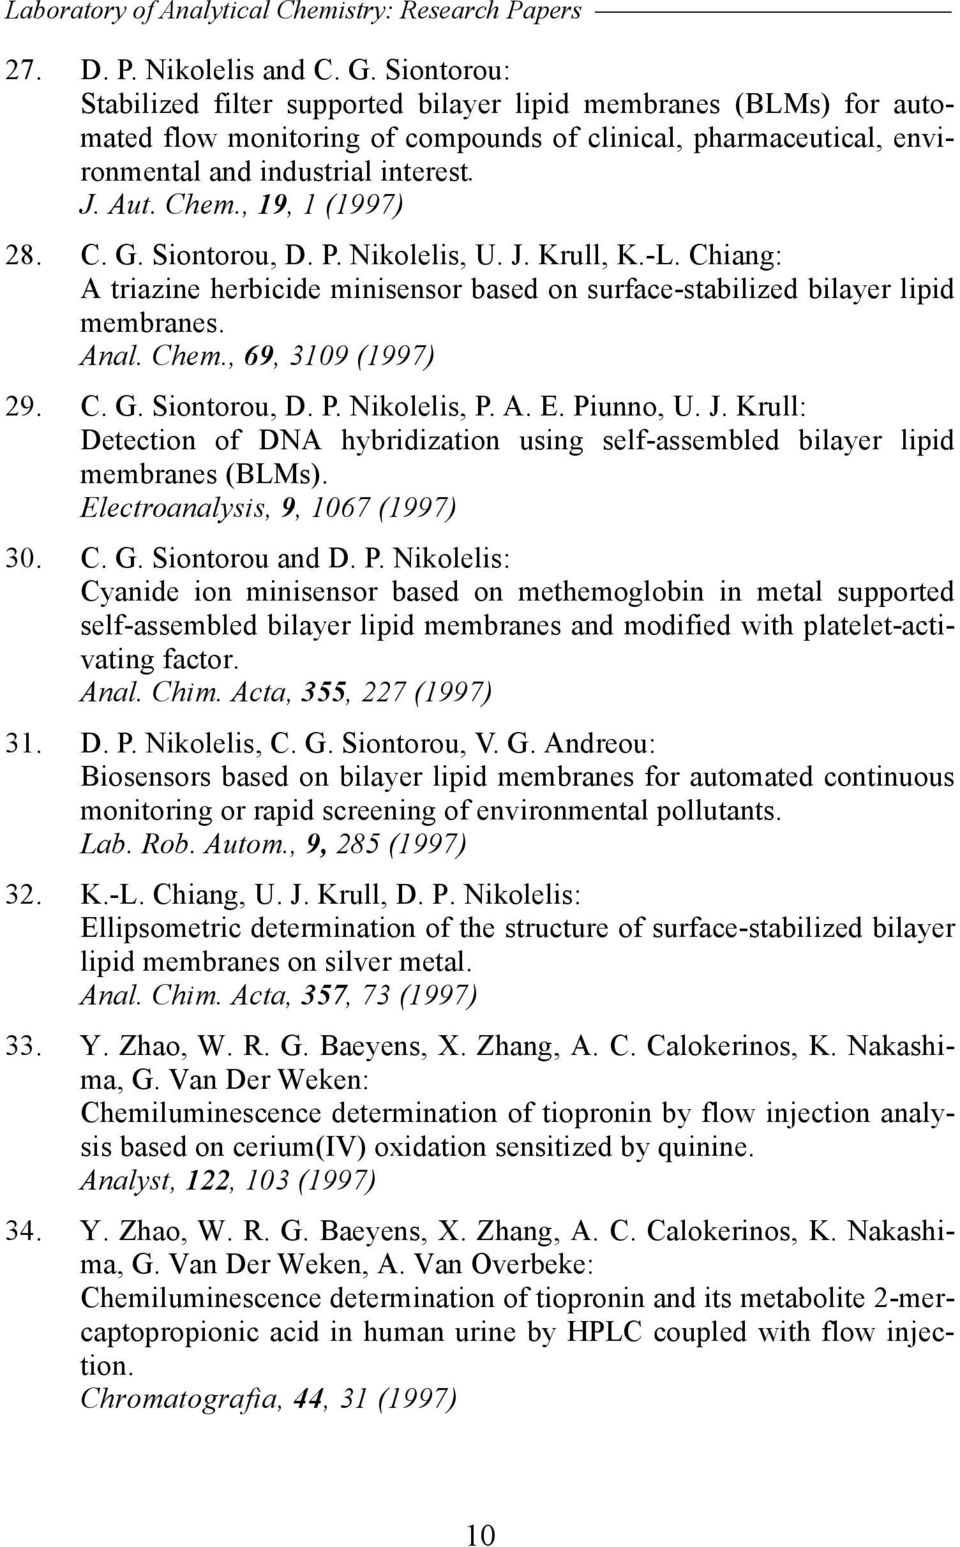 , 19, 1 (1997) 28. C. G. Siontorou, D. P. Nikolelis, U. J. Krull, K.-L. Chiang: A triazine herbicide minisensor based on surface-stabilized bilayer lipid membranes. Anal. Chem., 69, 3109 (1997) 29. C. G. Siontorou, D. P. Nikolelis, P.